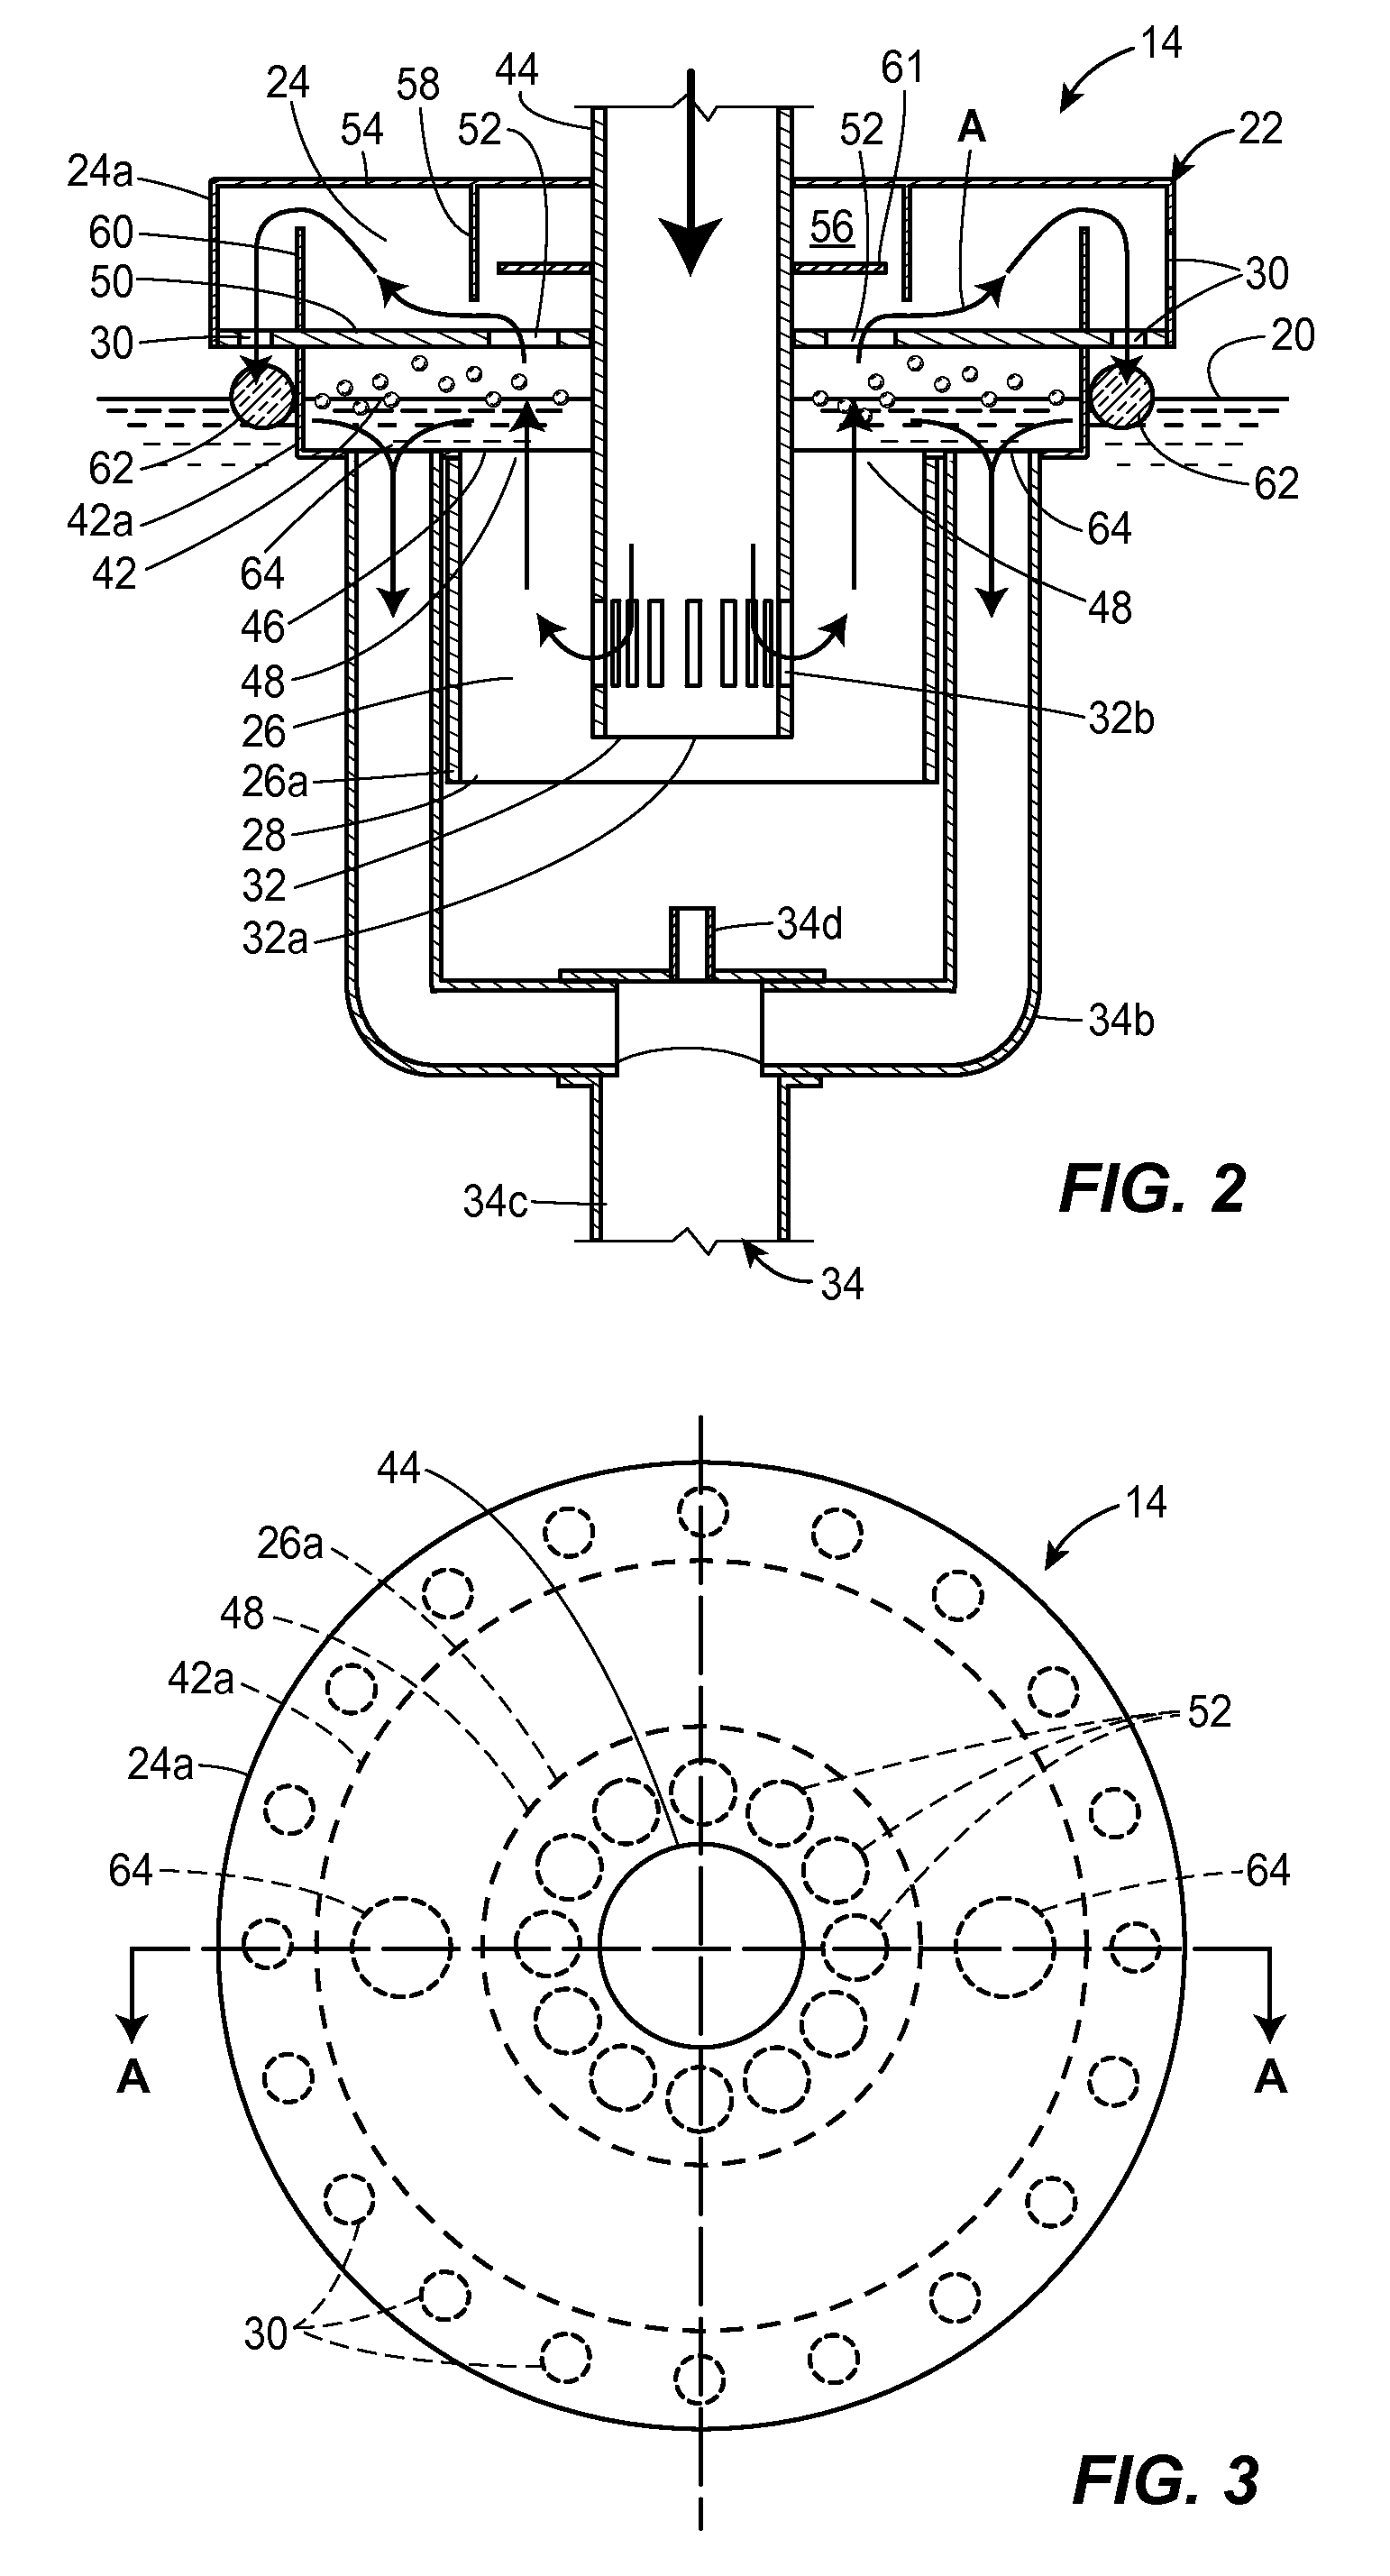 Fluid evaporator for an open fluid reservoir